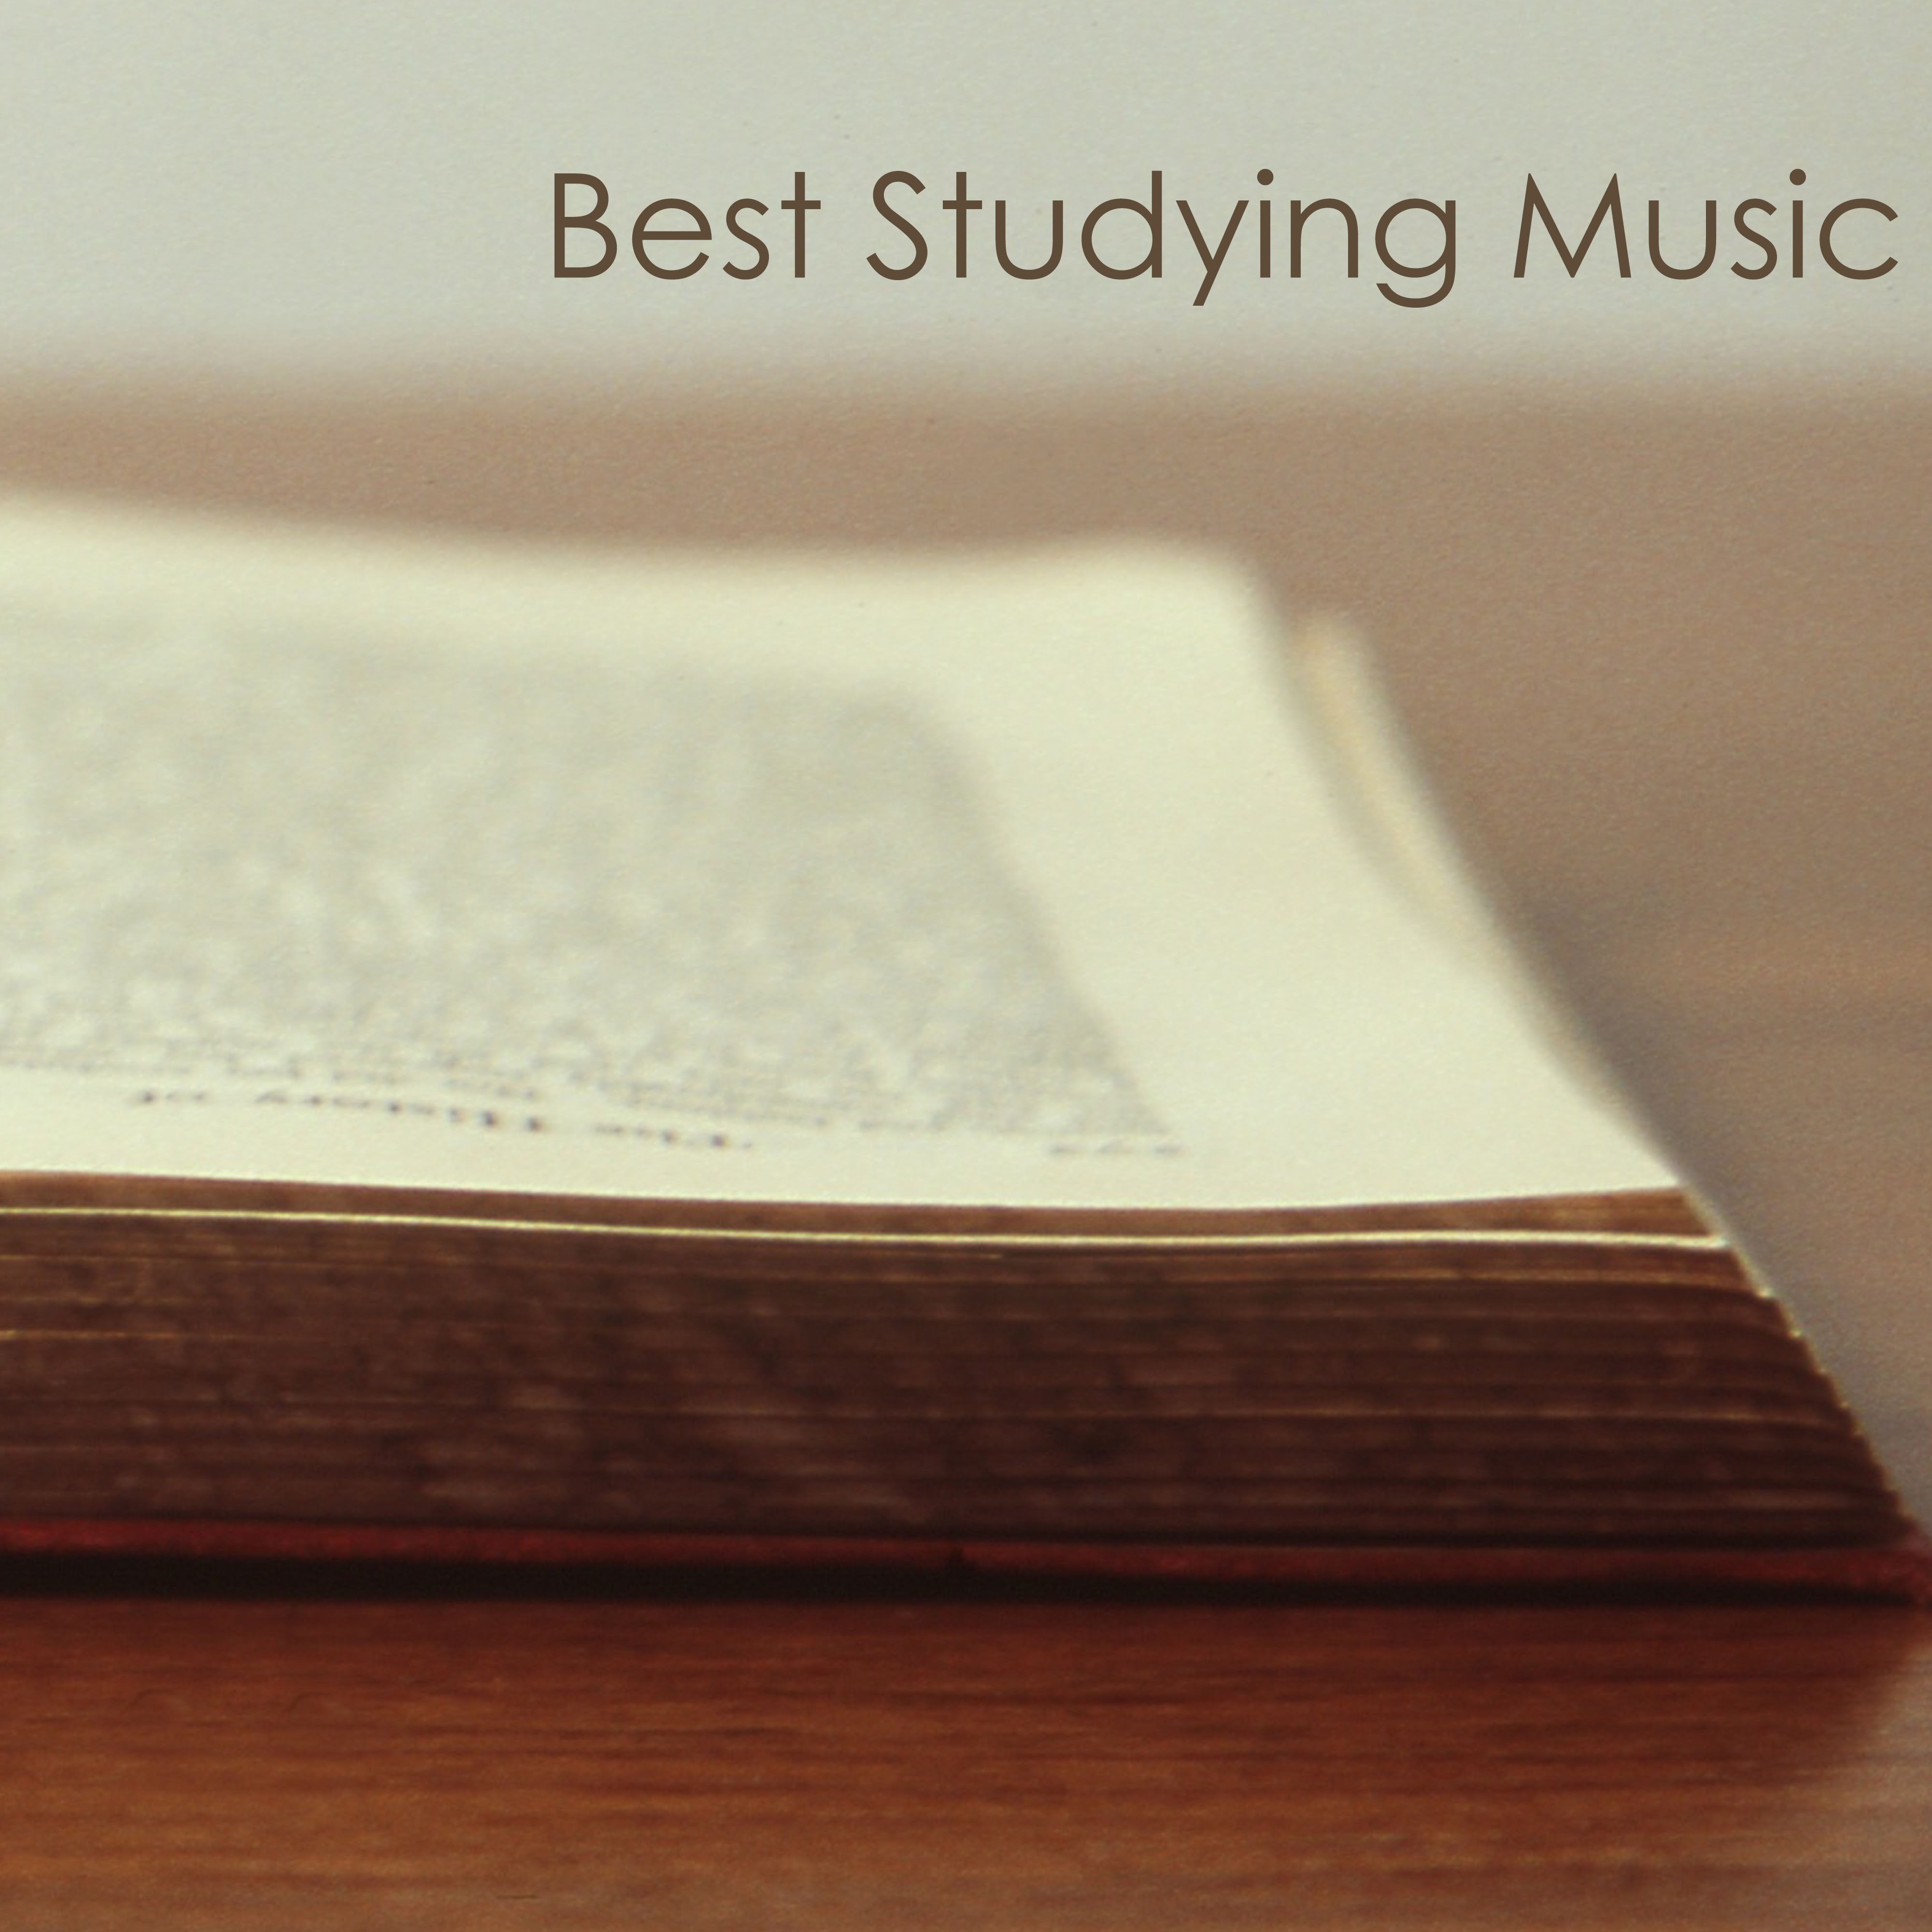 Study Music Guide